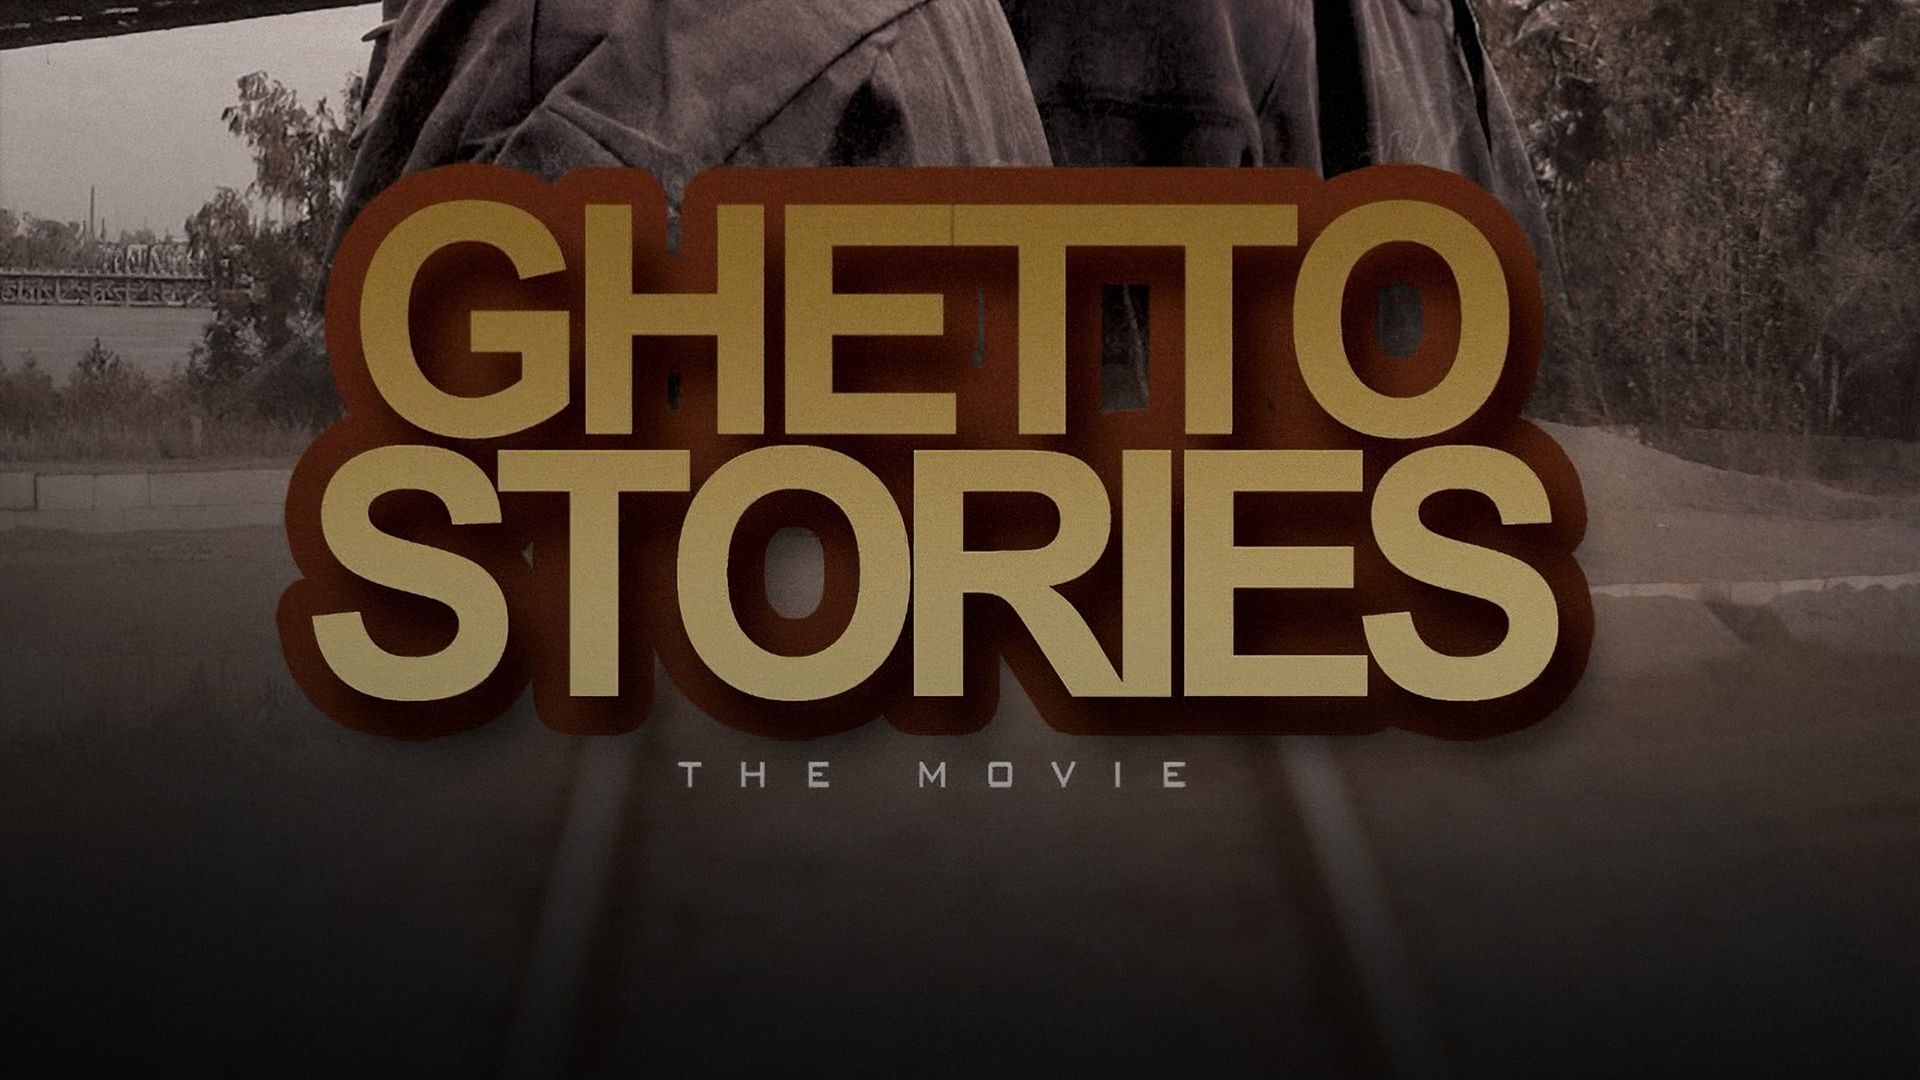 Ghetto Stories background